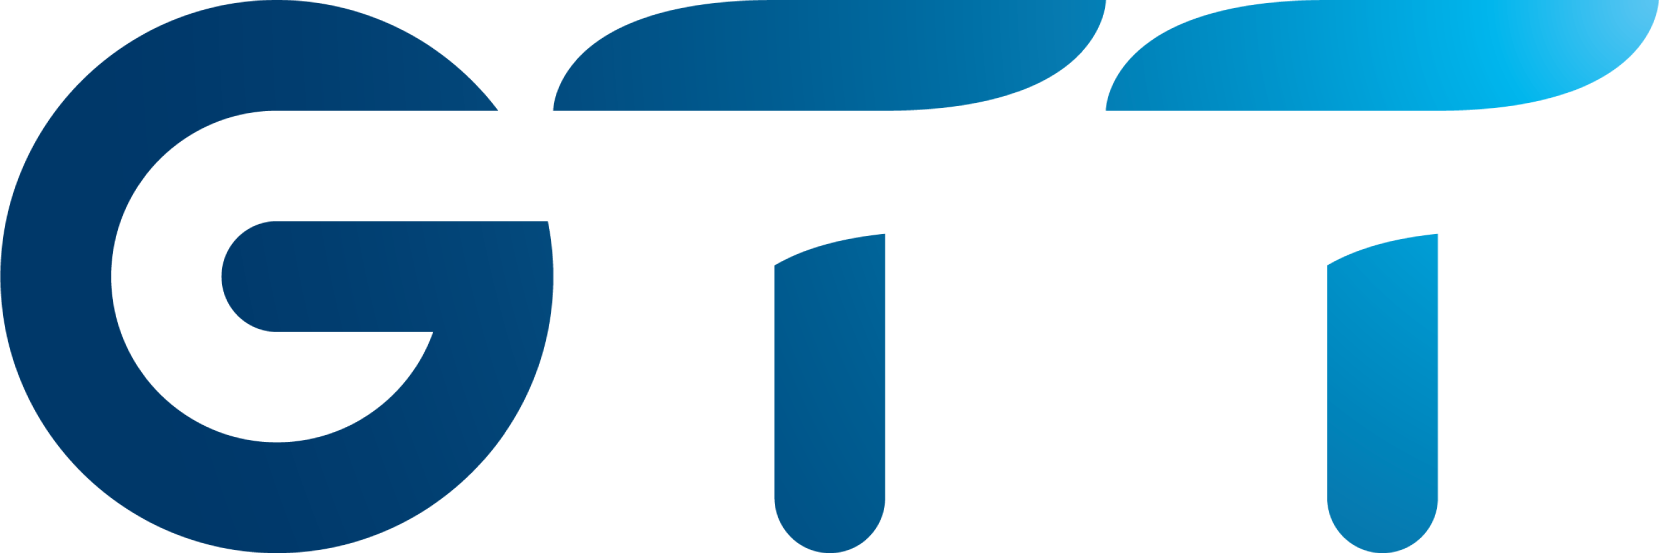 Gaztransport & Technigaz logo (transparent PNG)